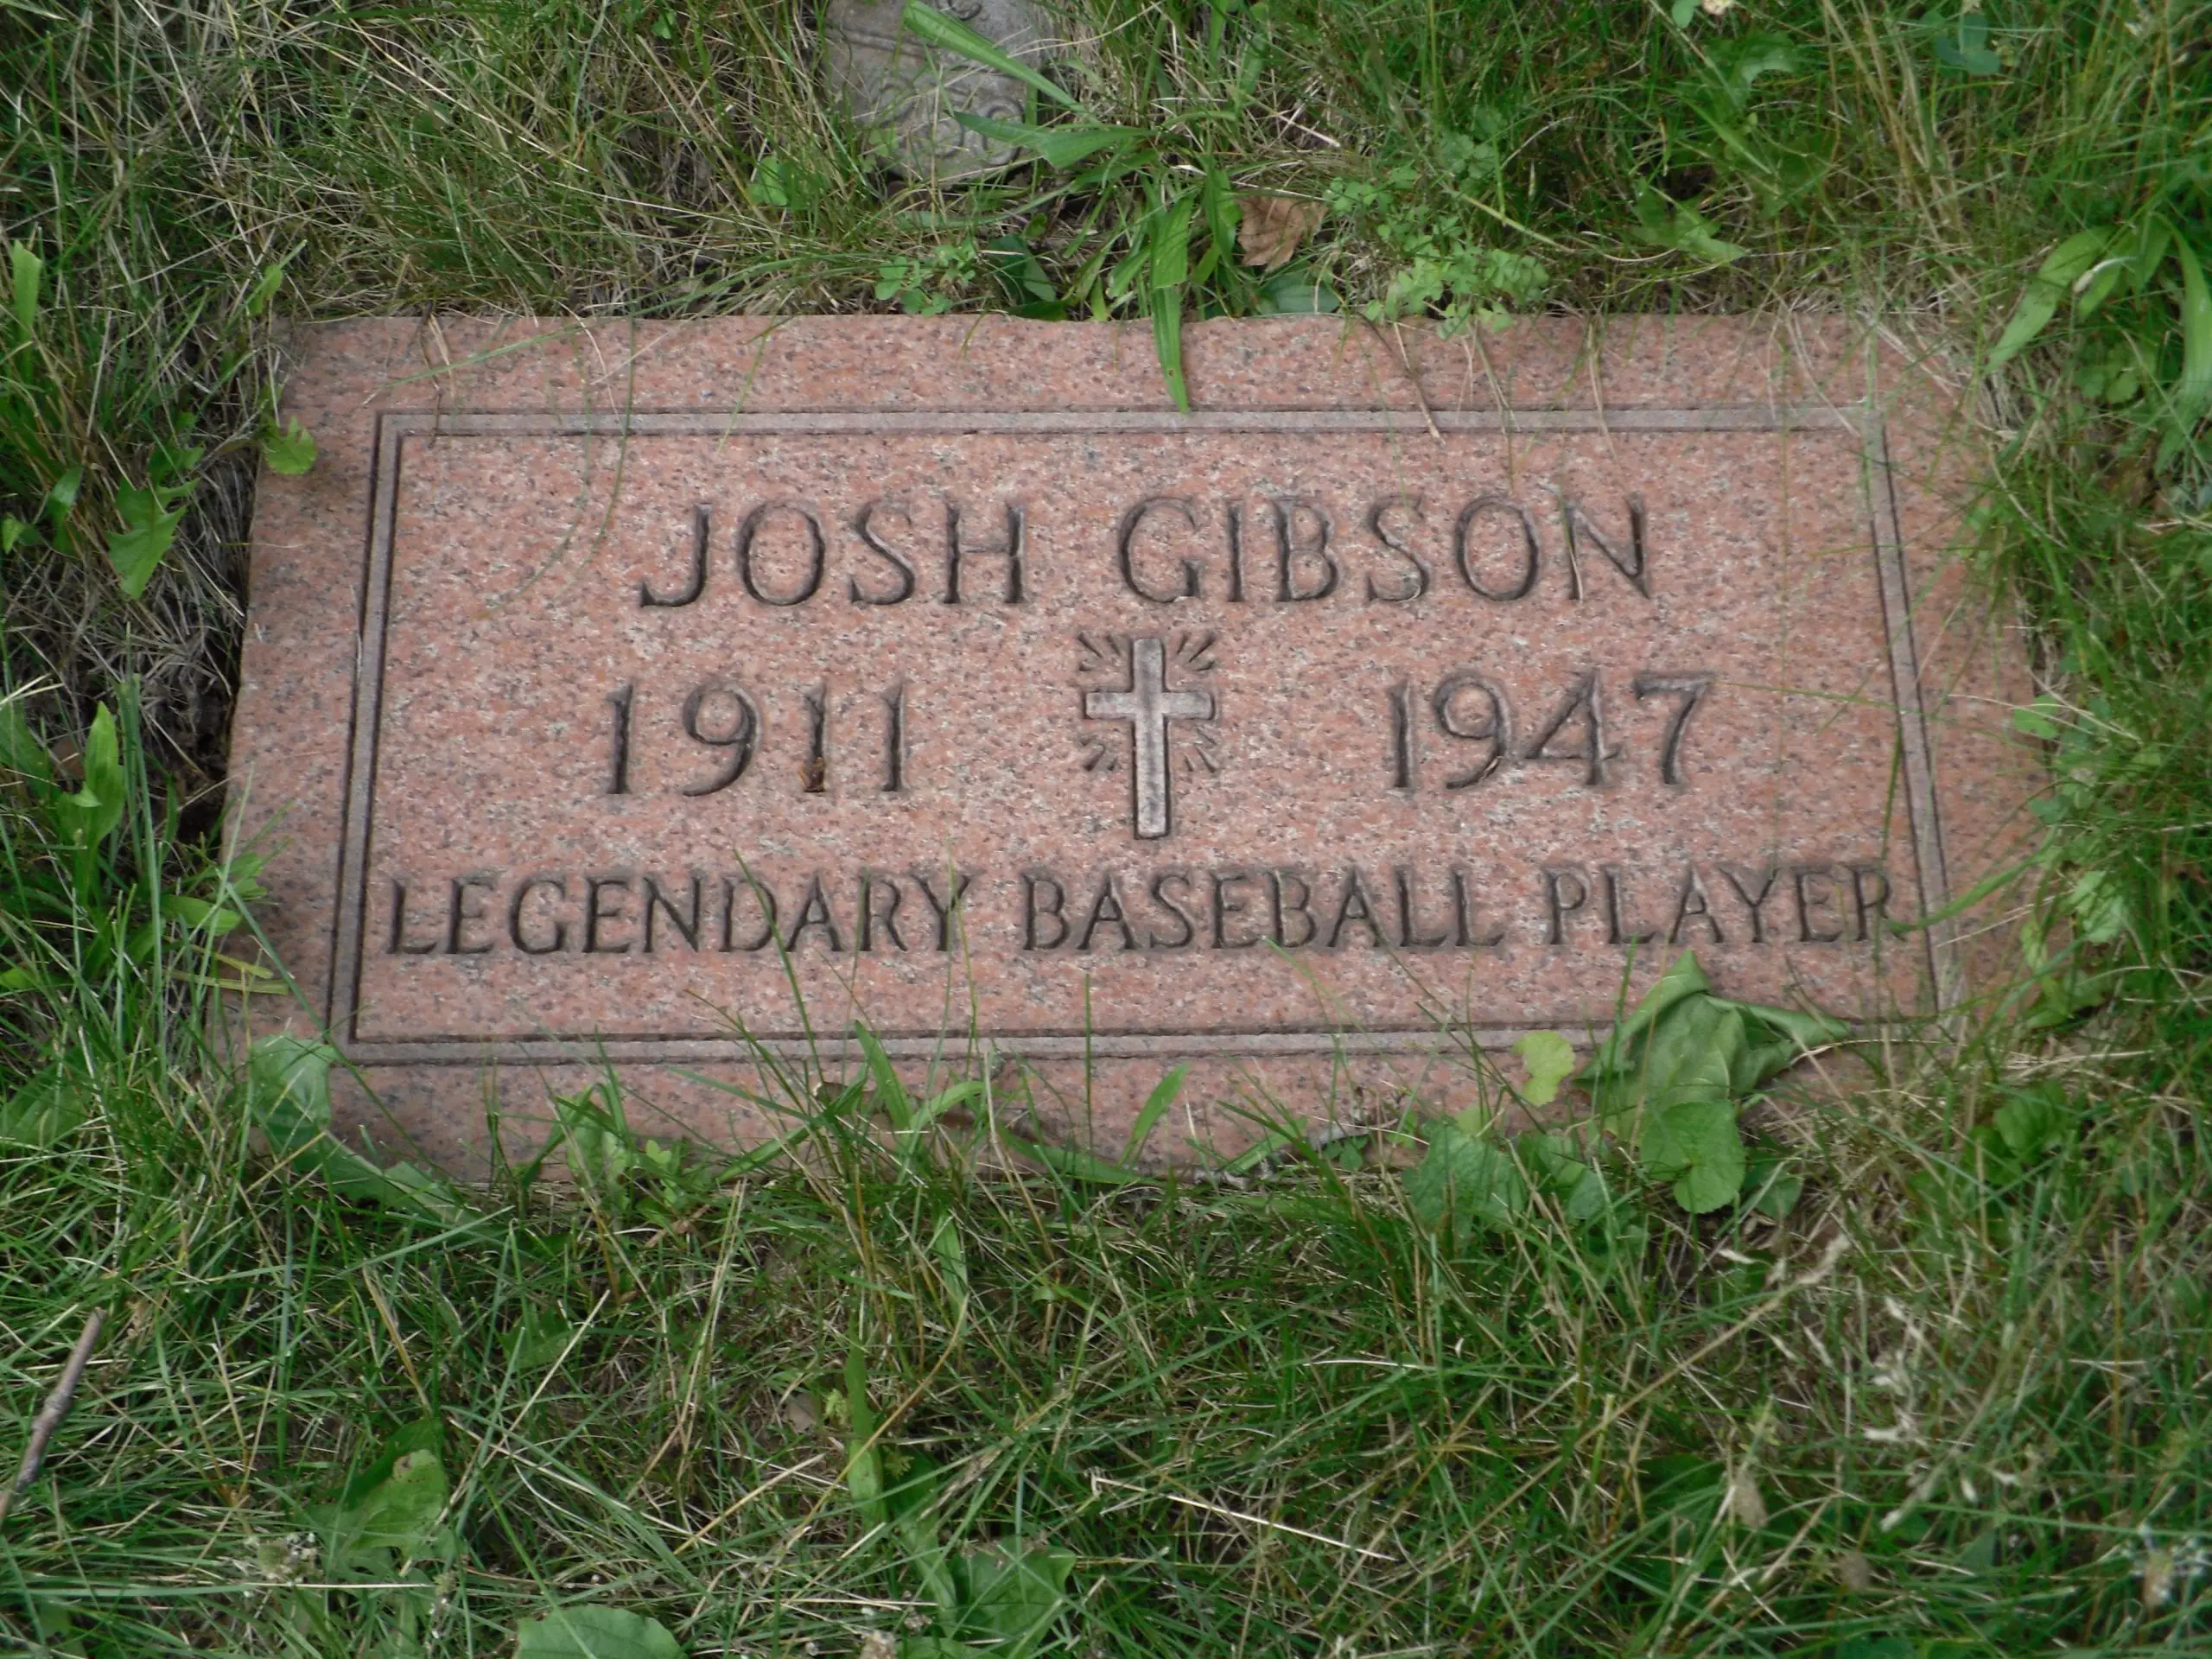 Josh Gibson's grave